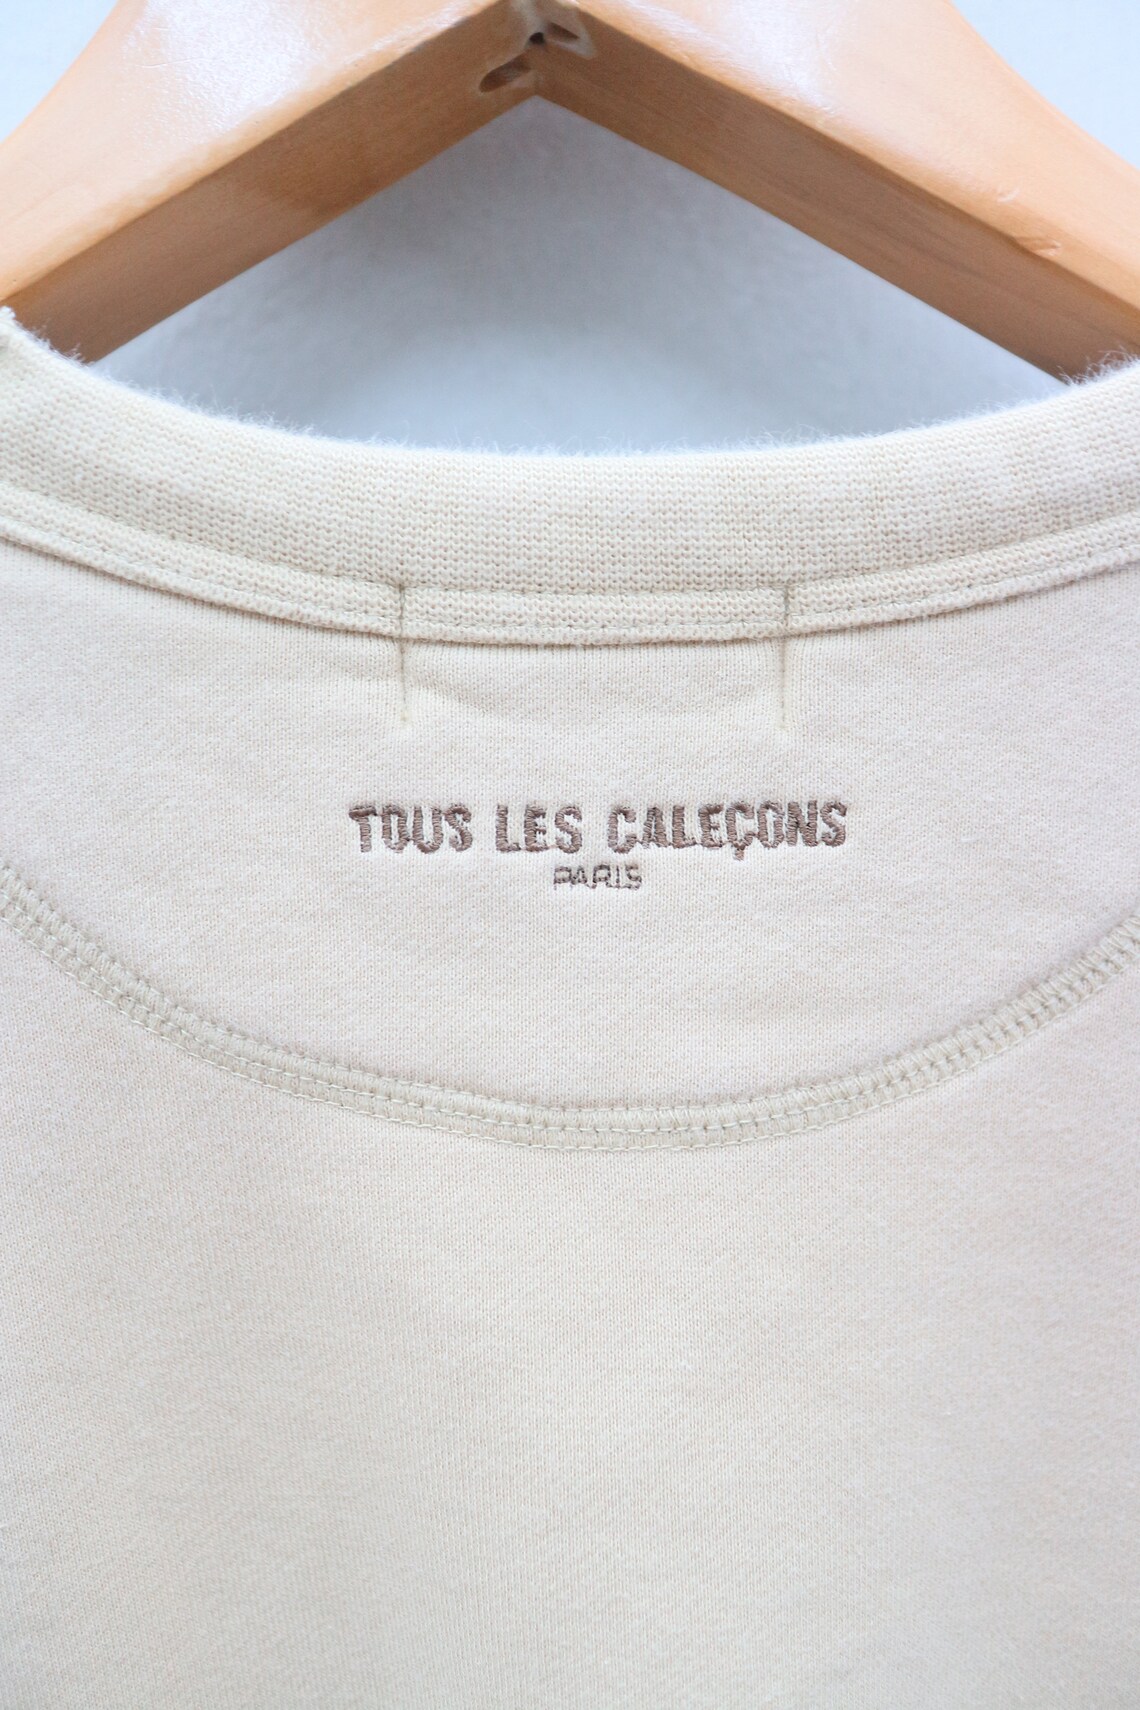 Vintage TOUS LES CALECONS Paris Streetswear Big Spell Big Logo | Etsy